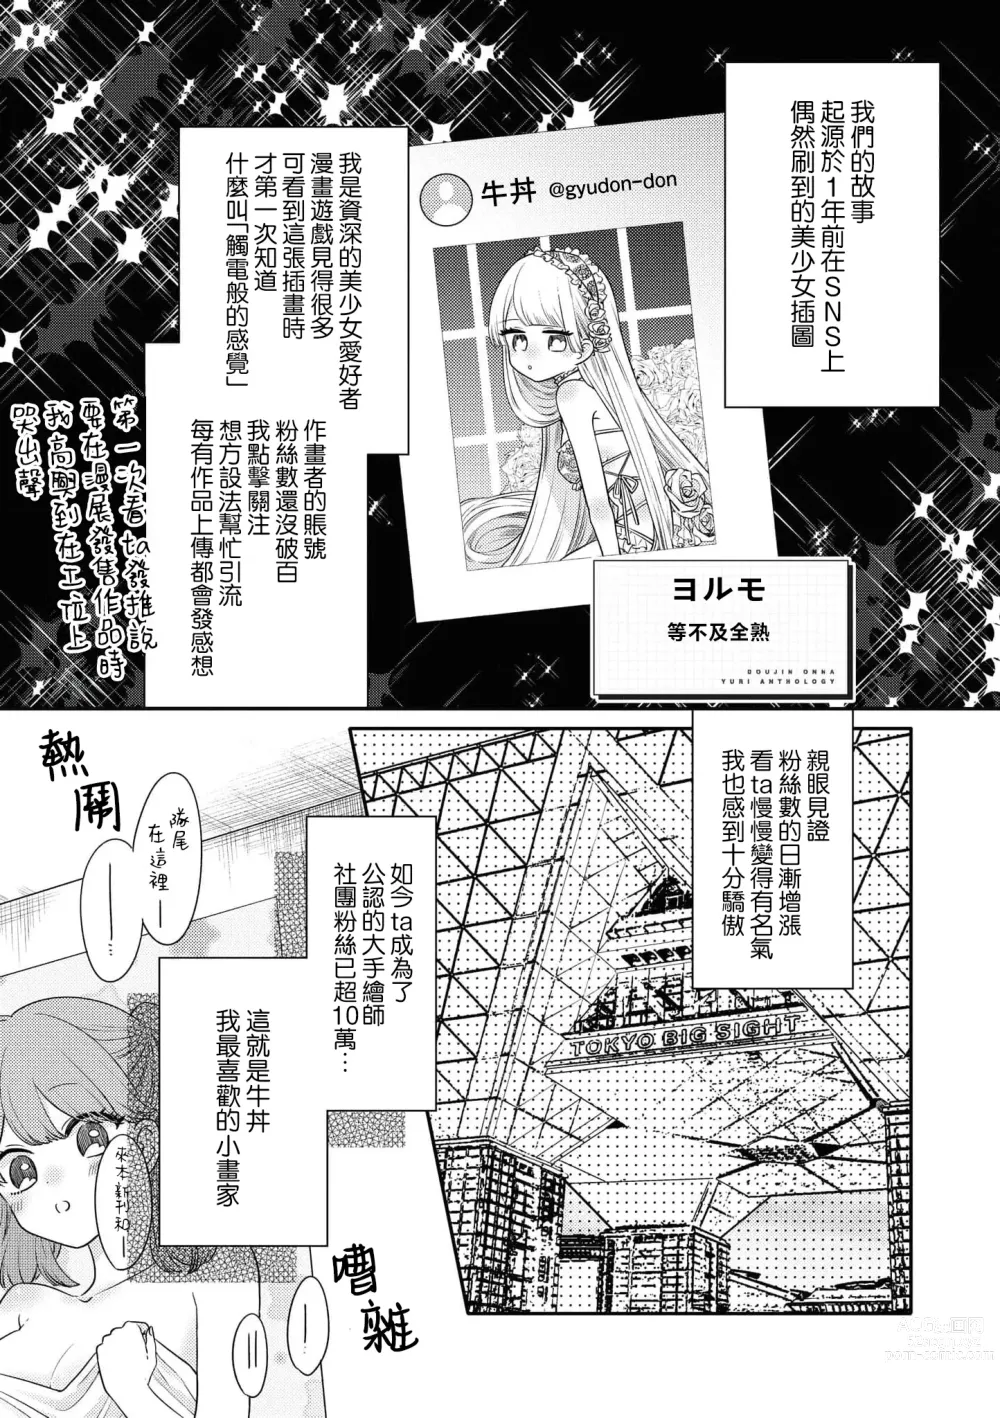 Page 2 of manga 等不及全熟（doujinonna yuri ansoroji-）